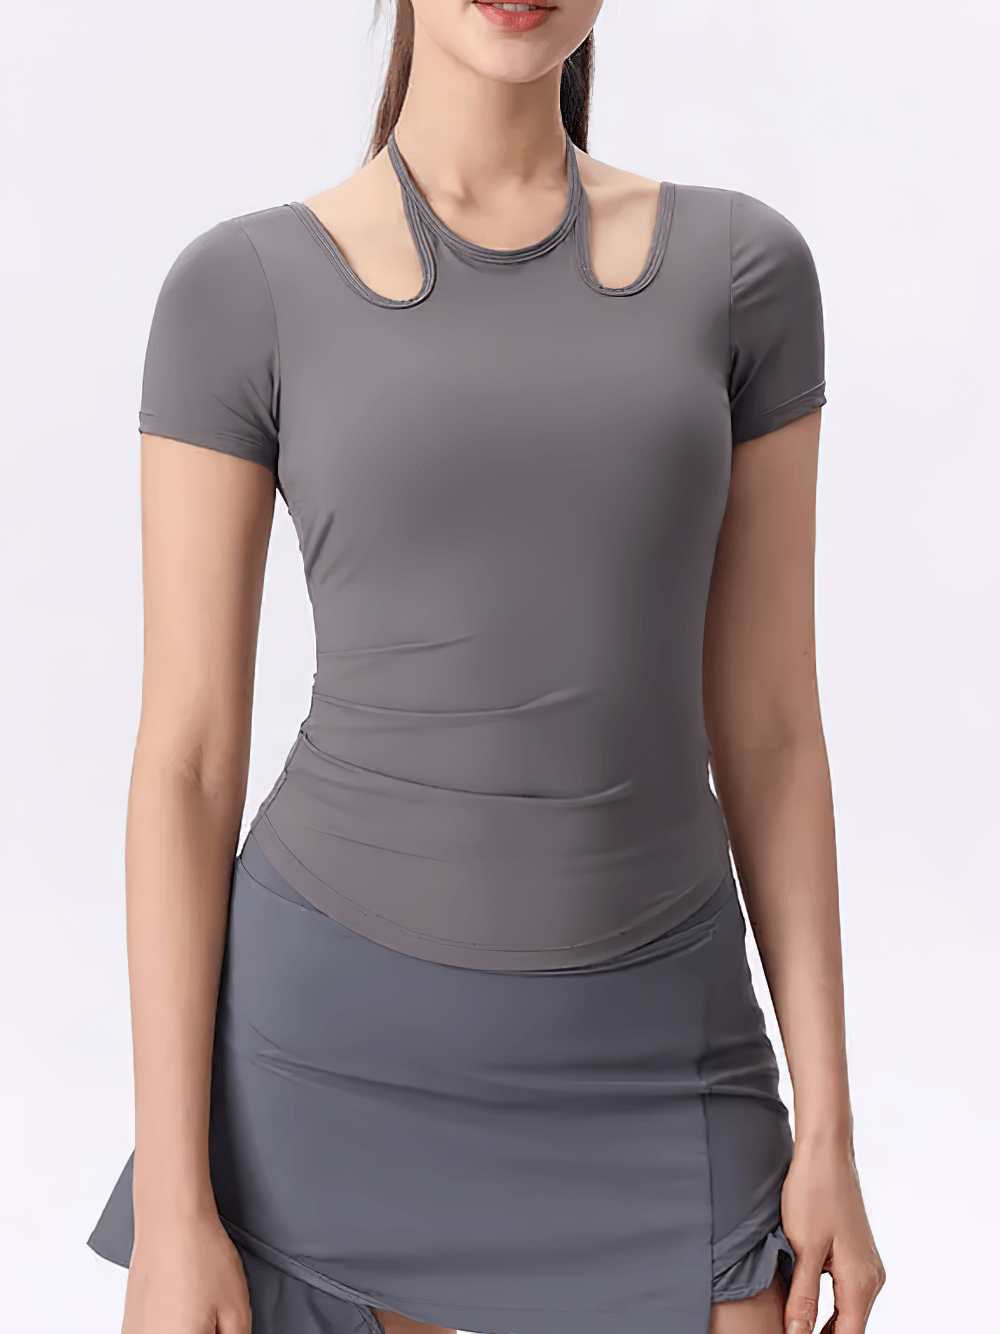 Women's Cross-Back Athletic Yoga T-Shirt - SF2108